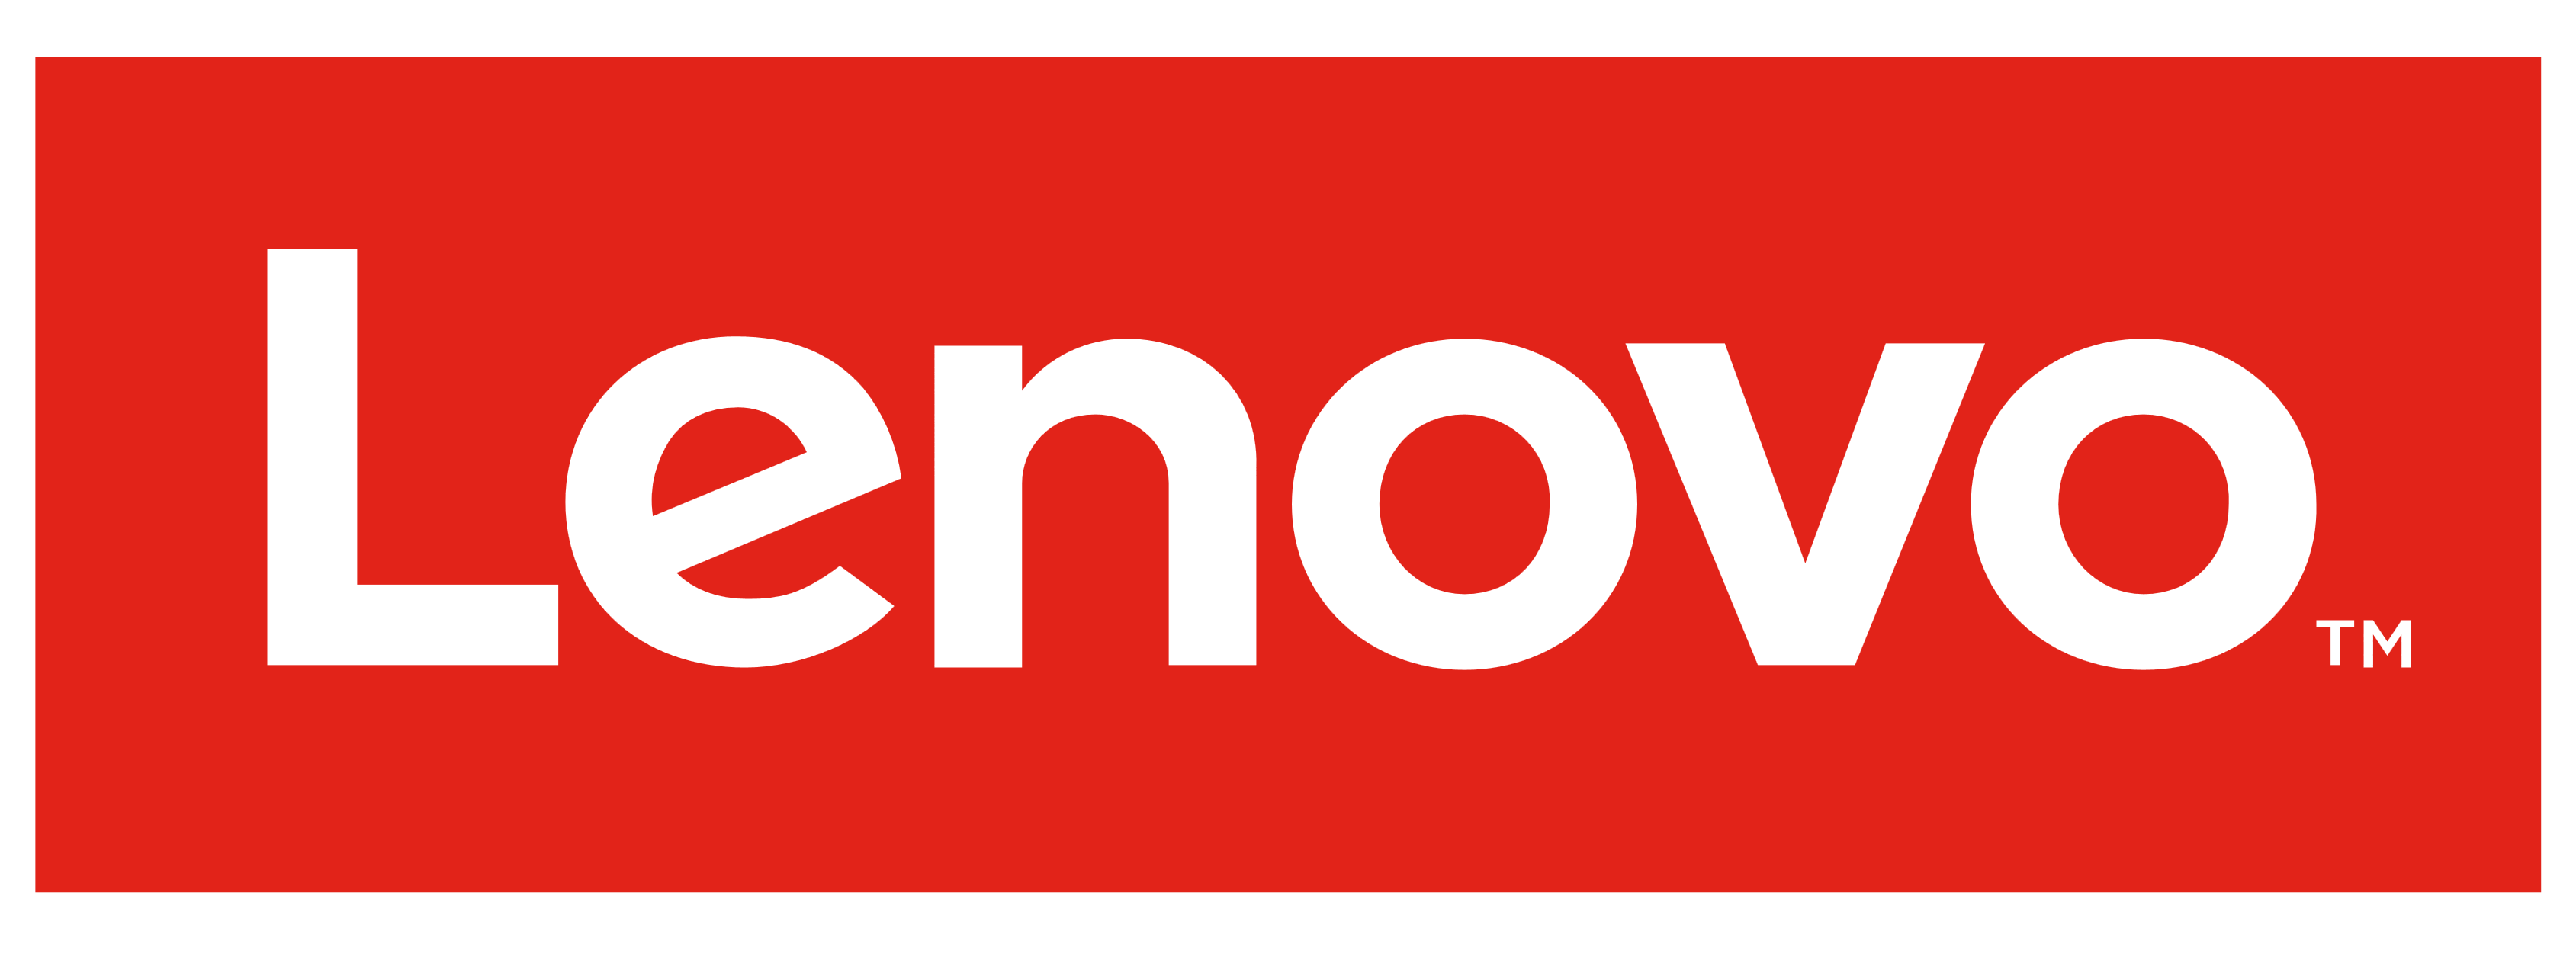 Lenovo logo, logotype